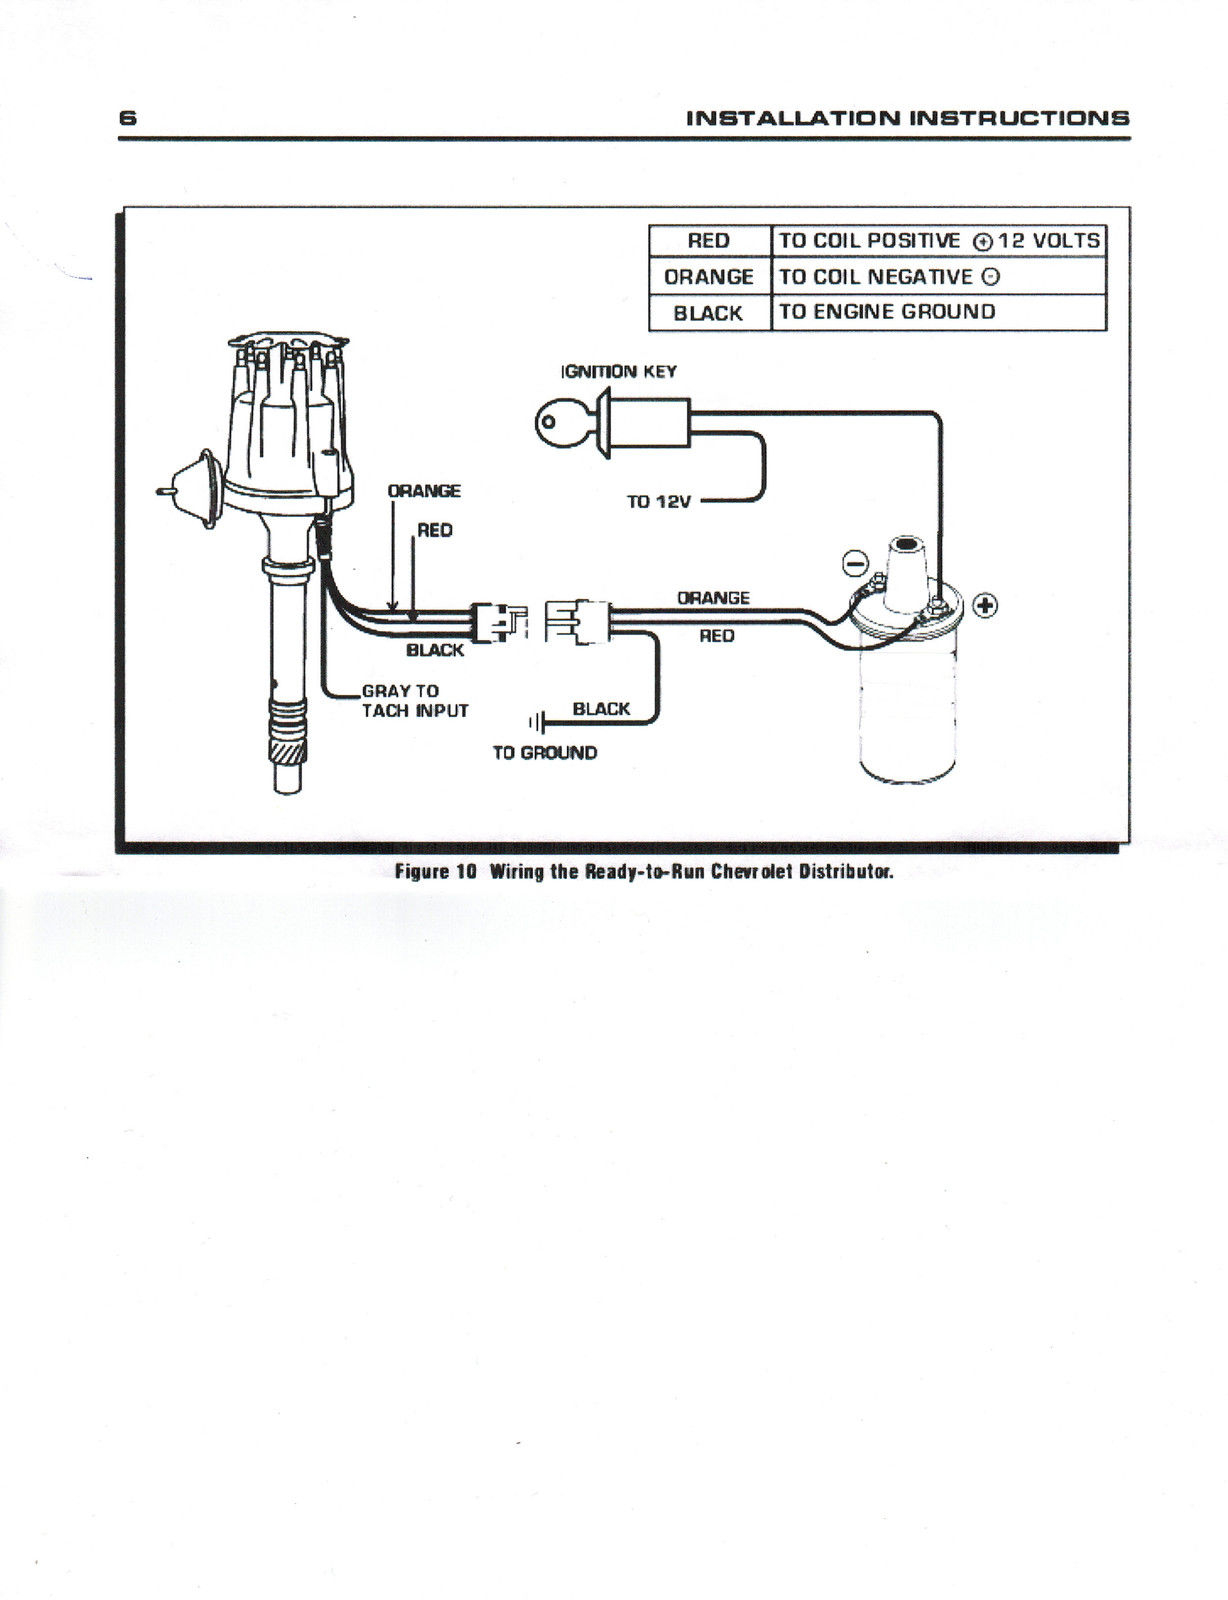 Diagram] Proform 390 Distributor Wiring Diagram Full Version